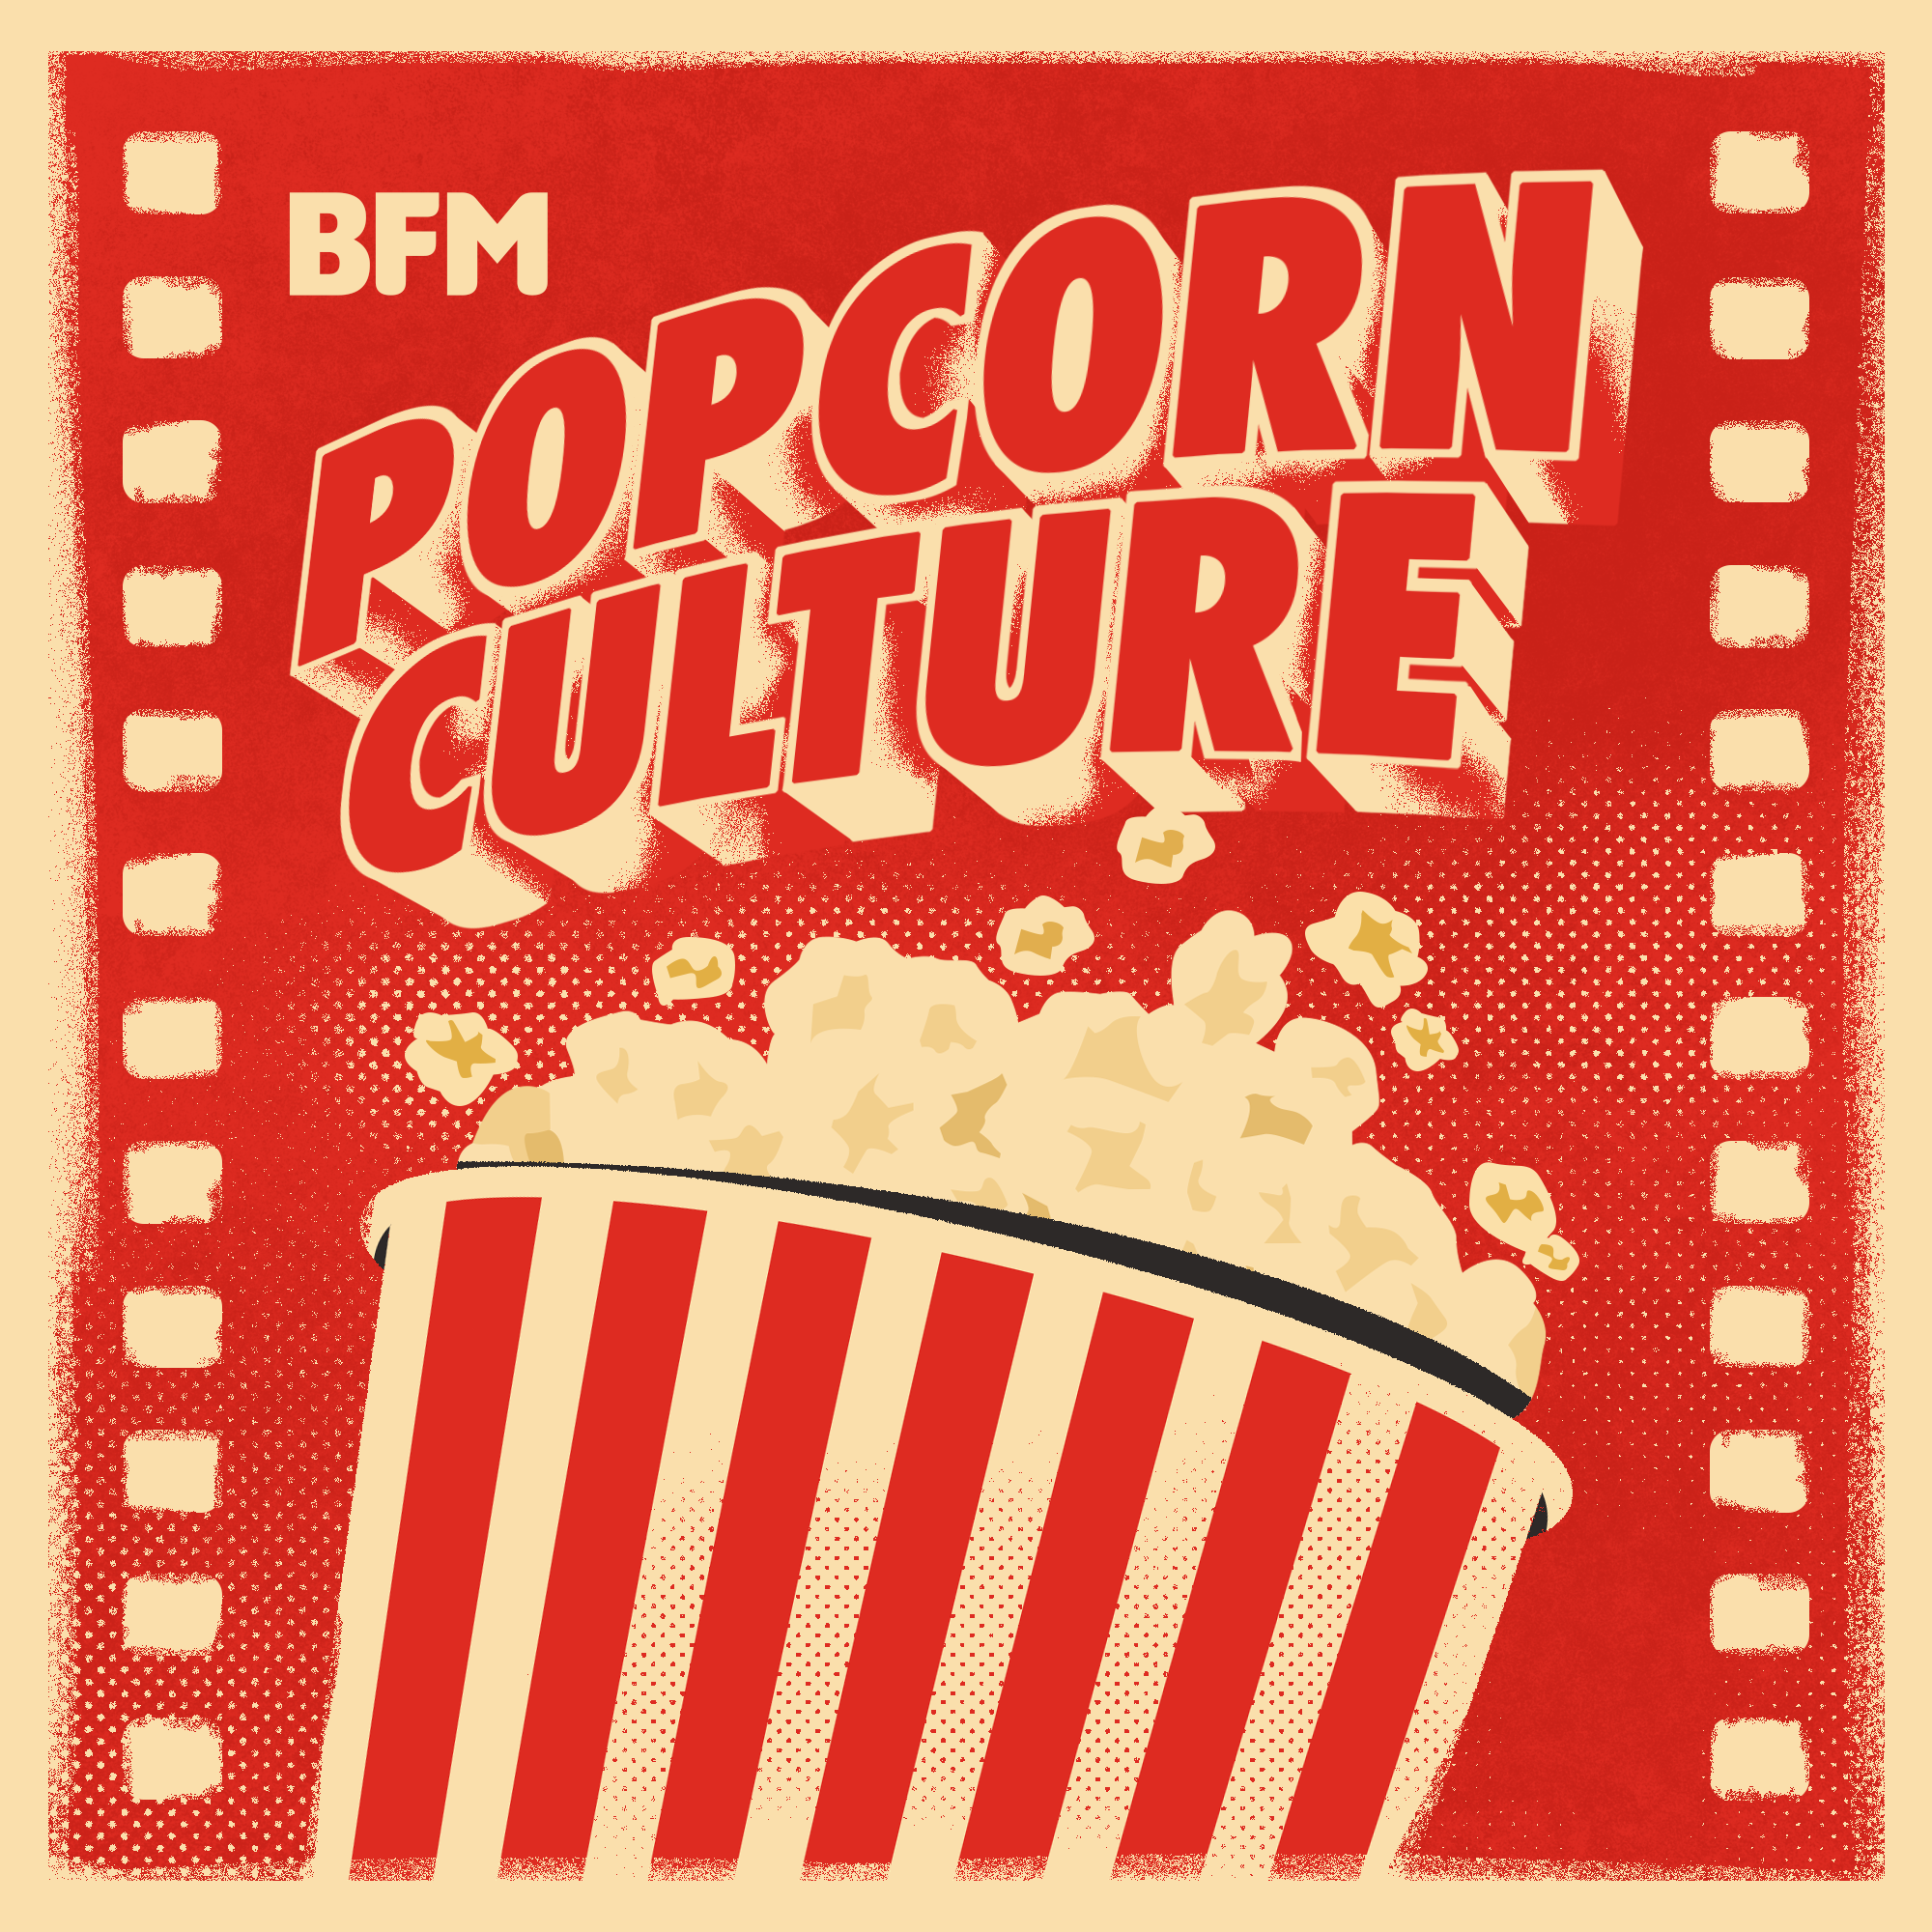 Popcorn Culture - Supercut: How Long Is Too Long, Anyway?